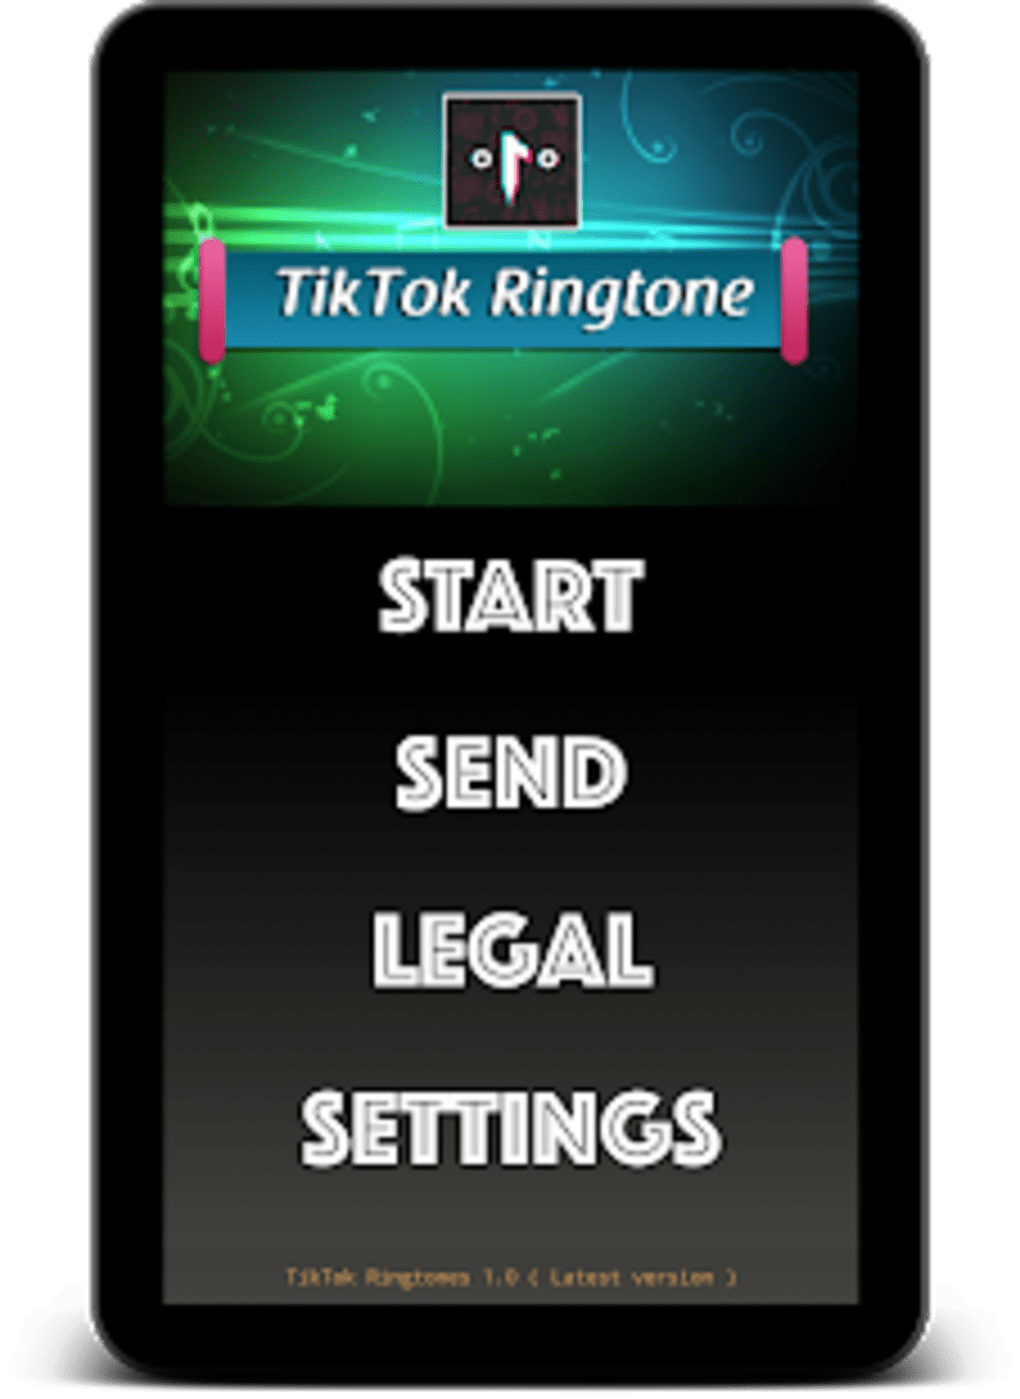 Download TikTok MP3 online with Free Tik Tok mp3 downloader